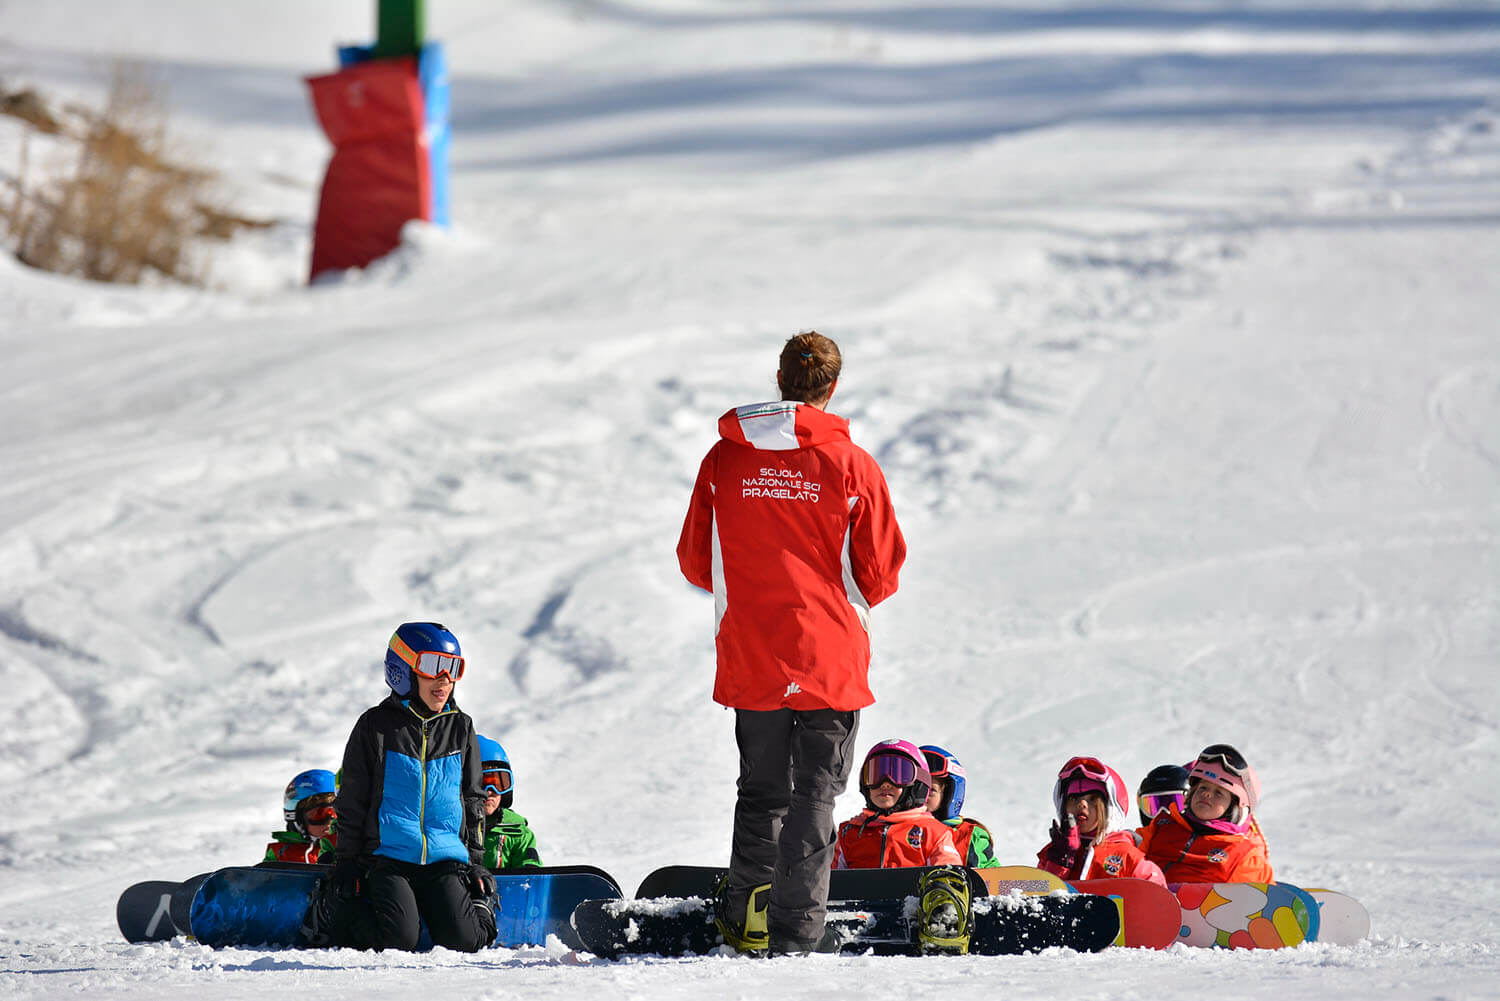 National Ski School in Pragelato - near Sestriere